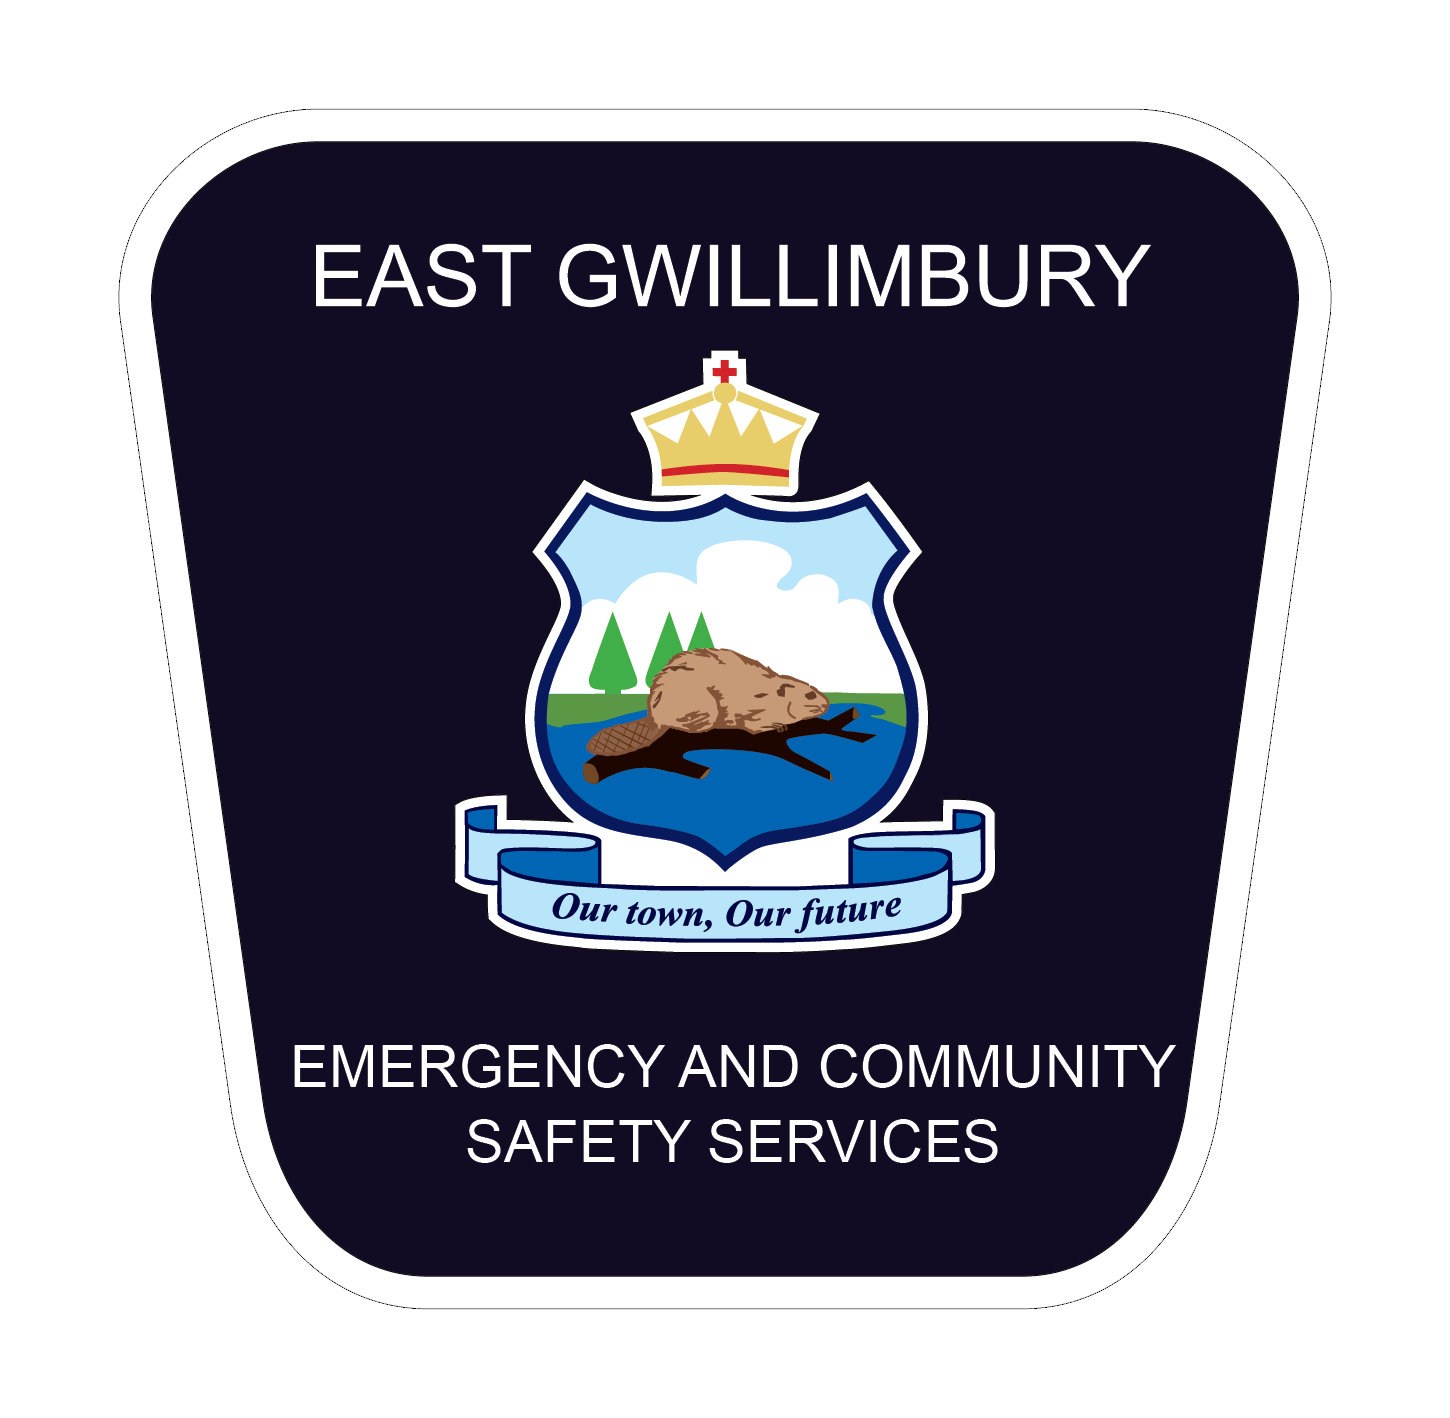 East Gwillimbury Emergency and Community Safety Services logo